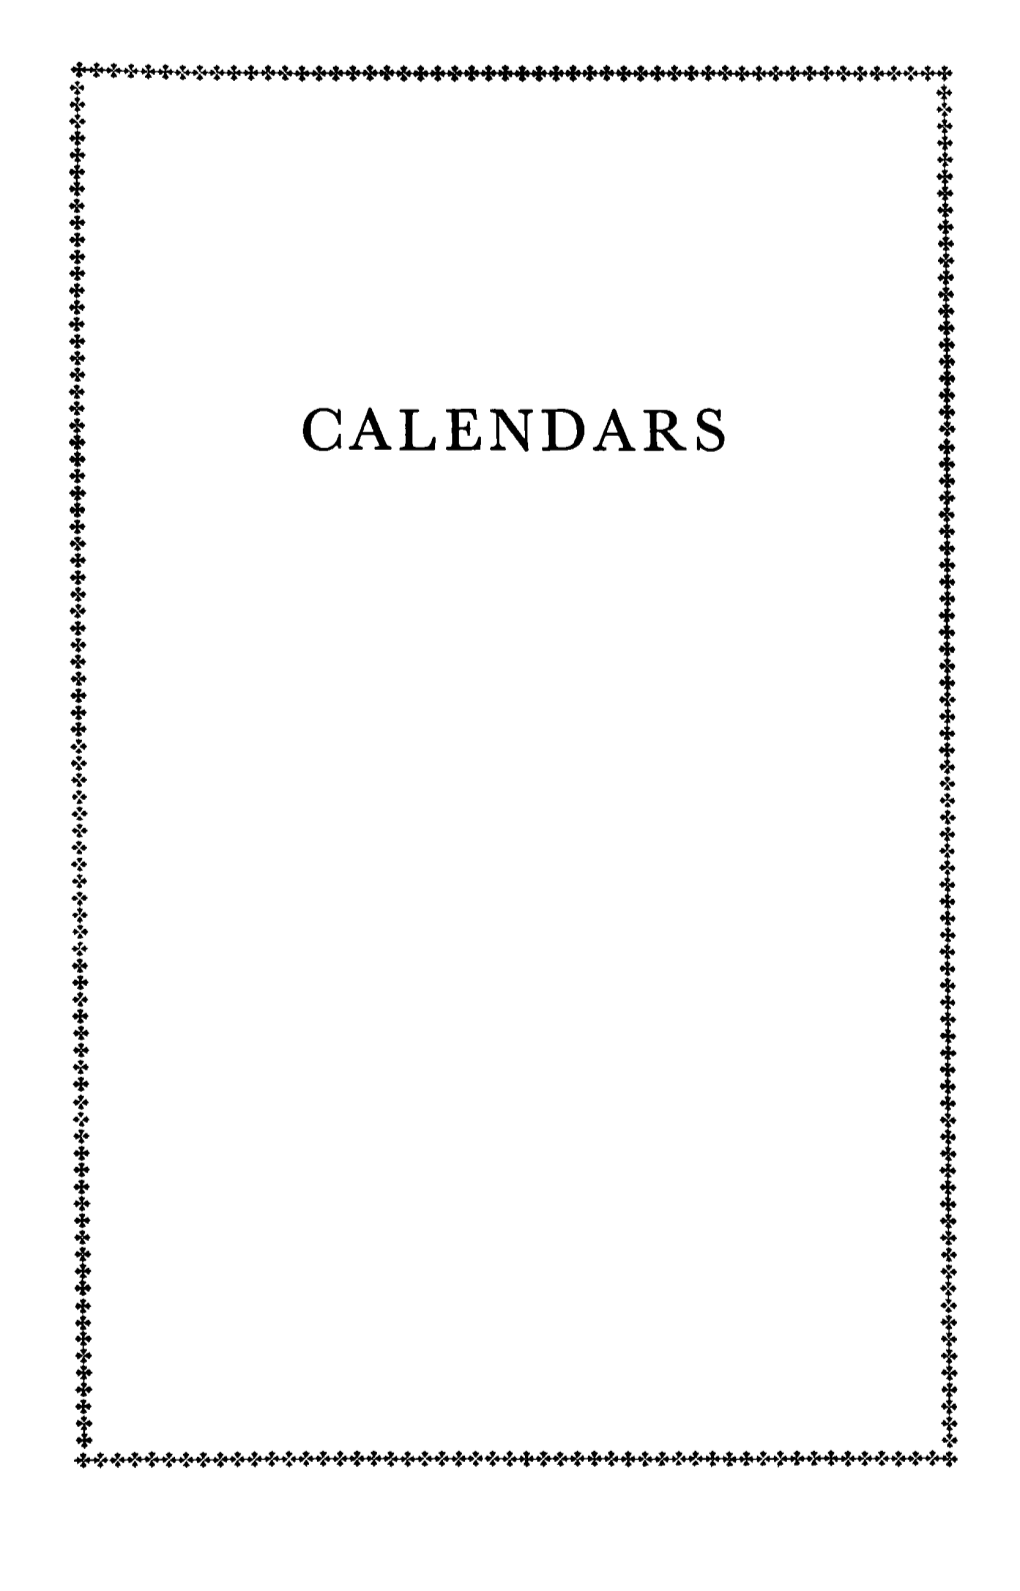 Calendars (1957)